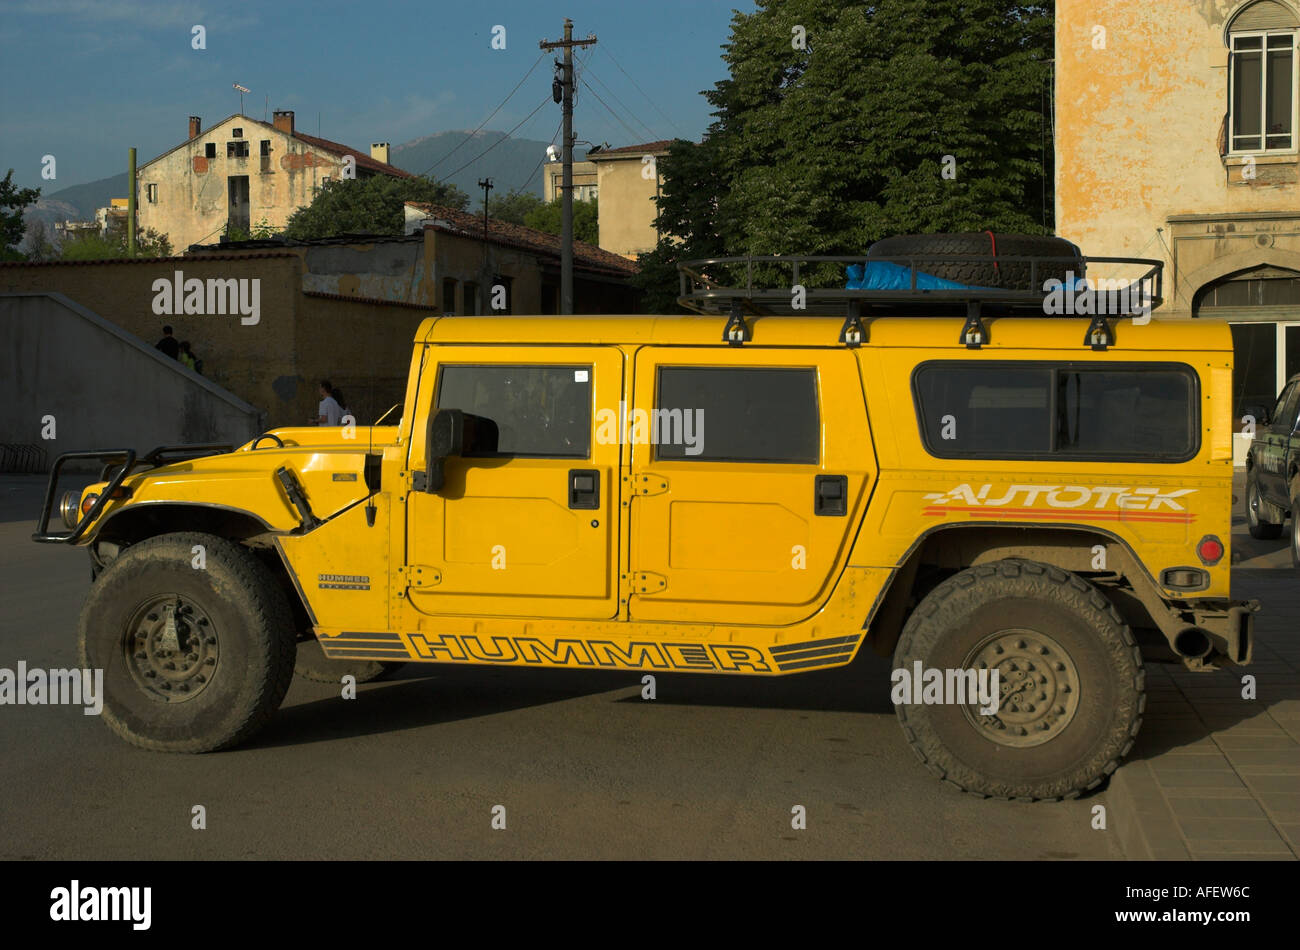 Albania Tirana yellow hummer vehicle Stock Photo